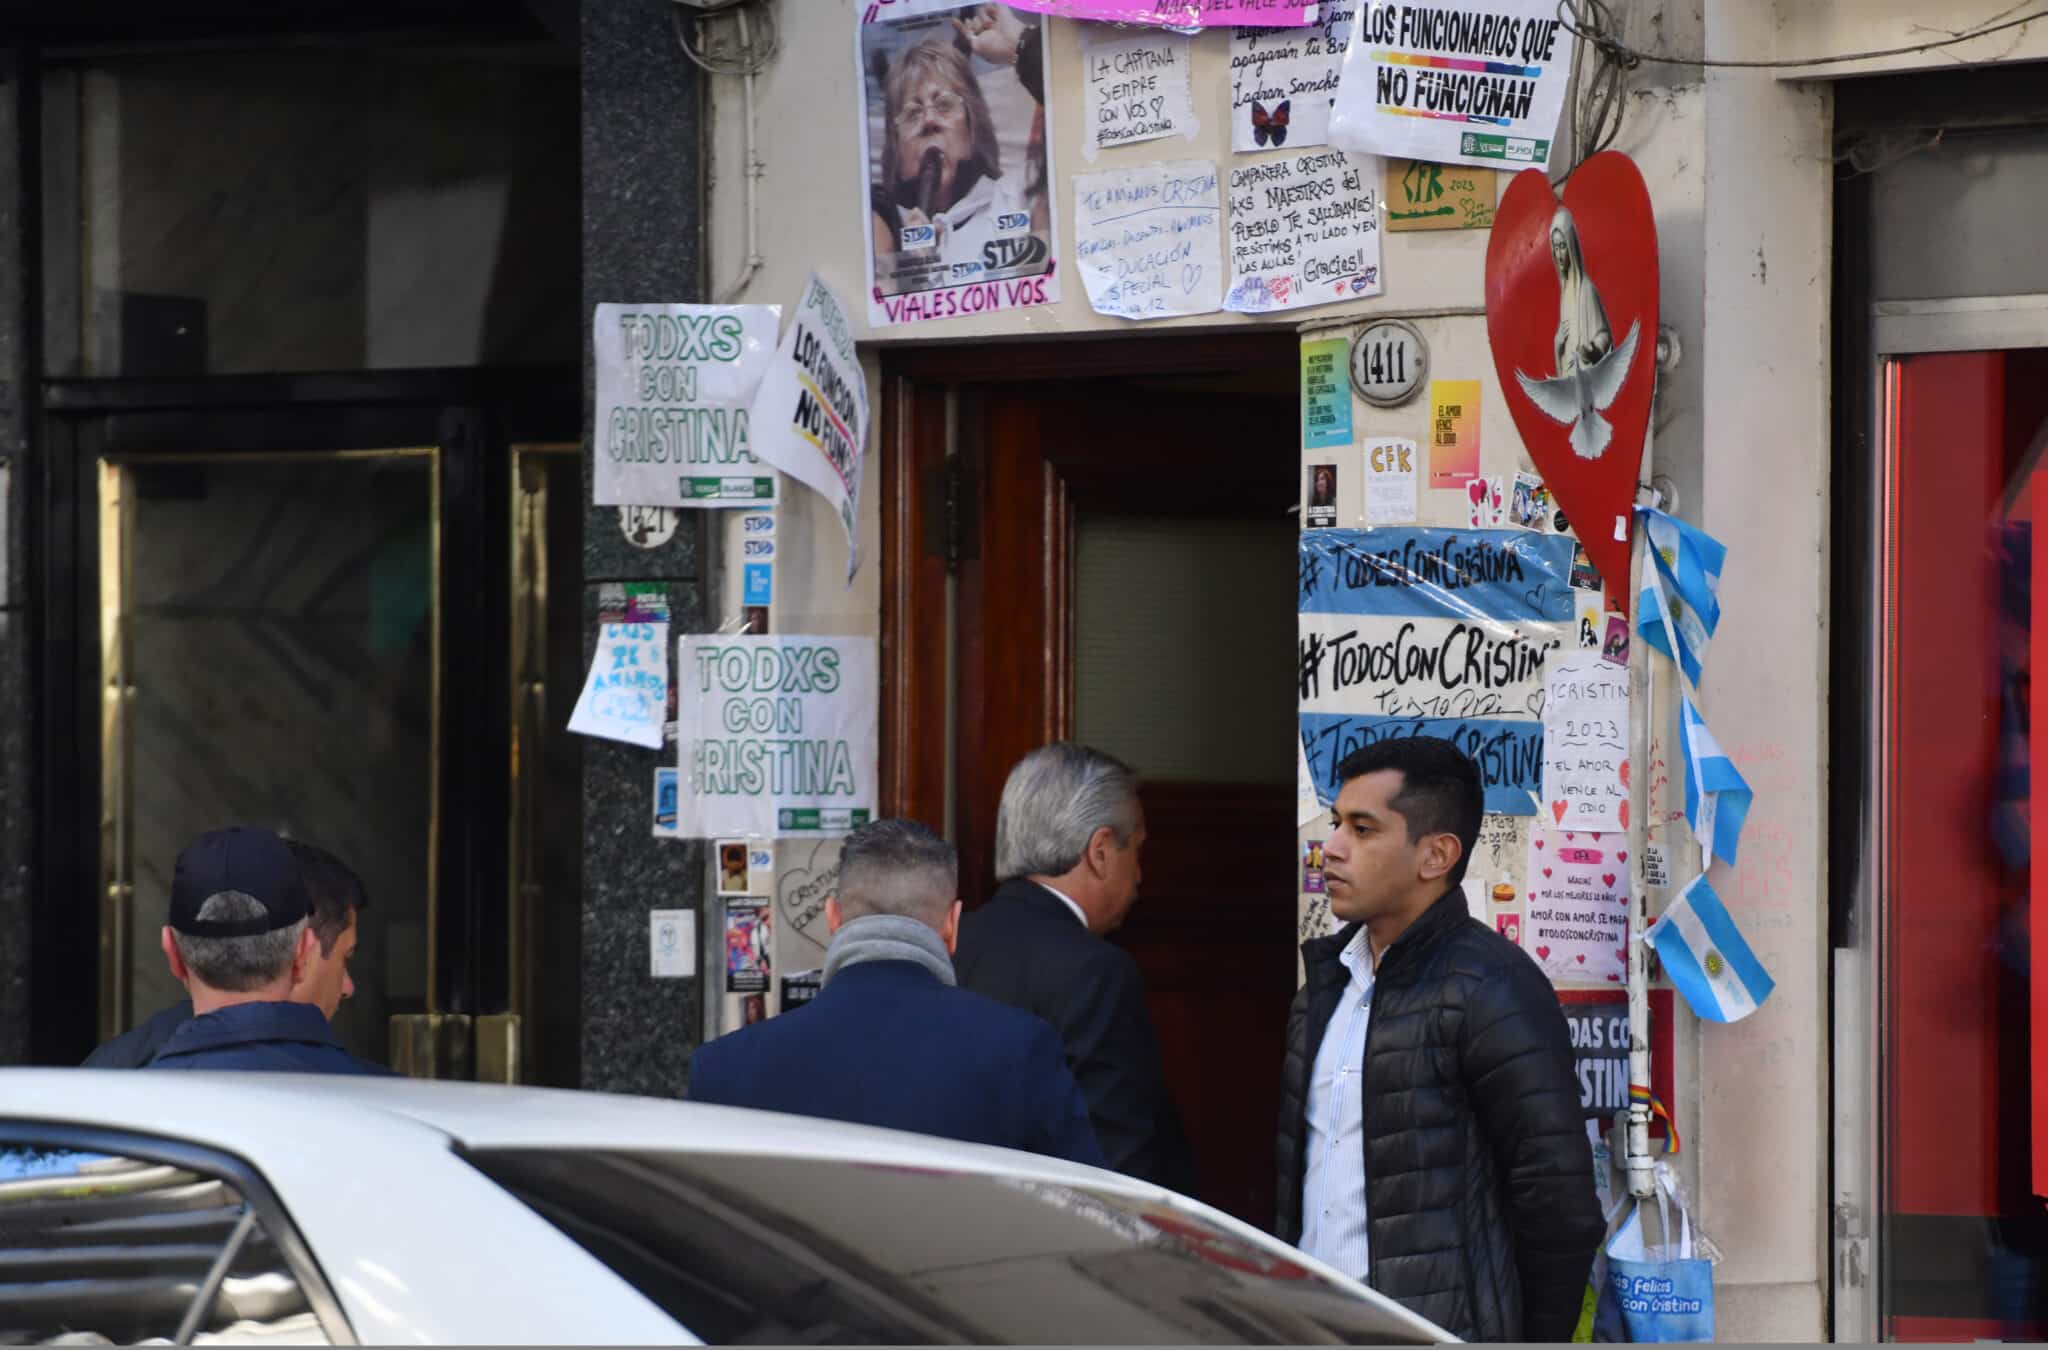 El oficialismo se echa a la calle para apoyar a Cristina Kirchner tras su intento de asesinato